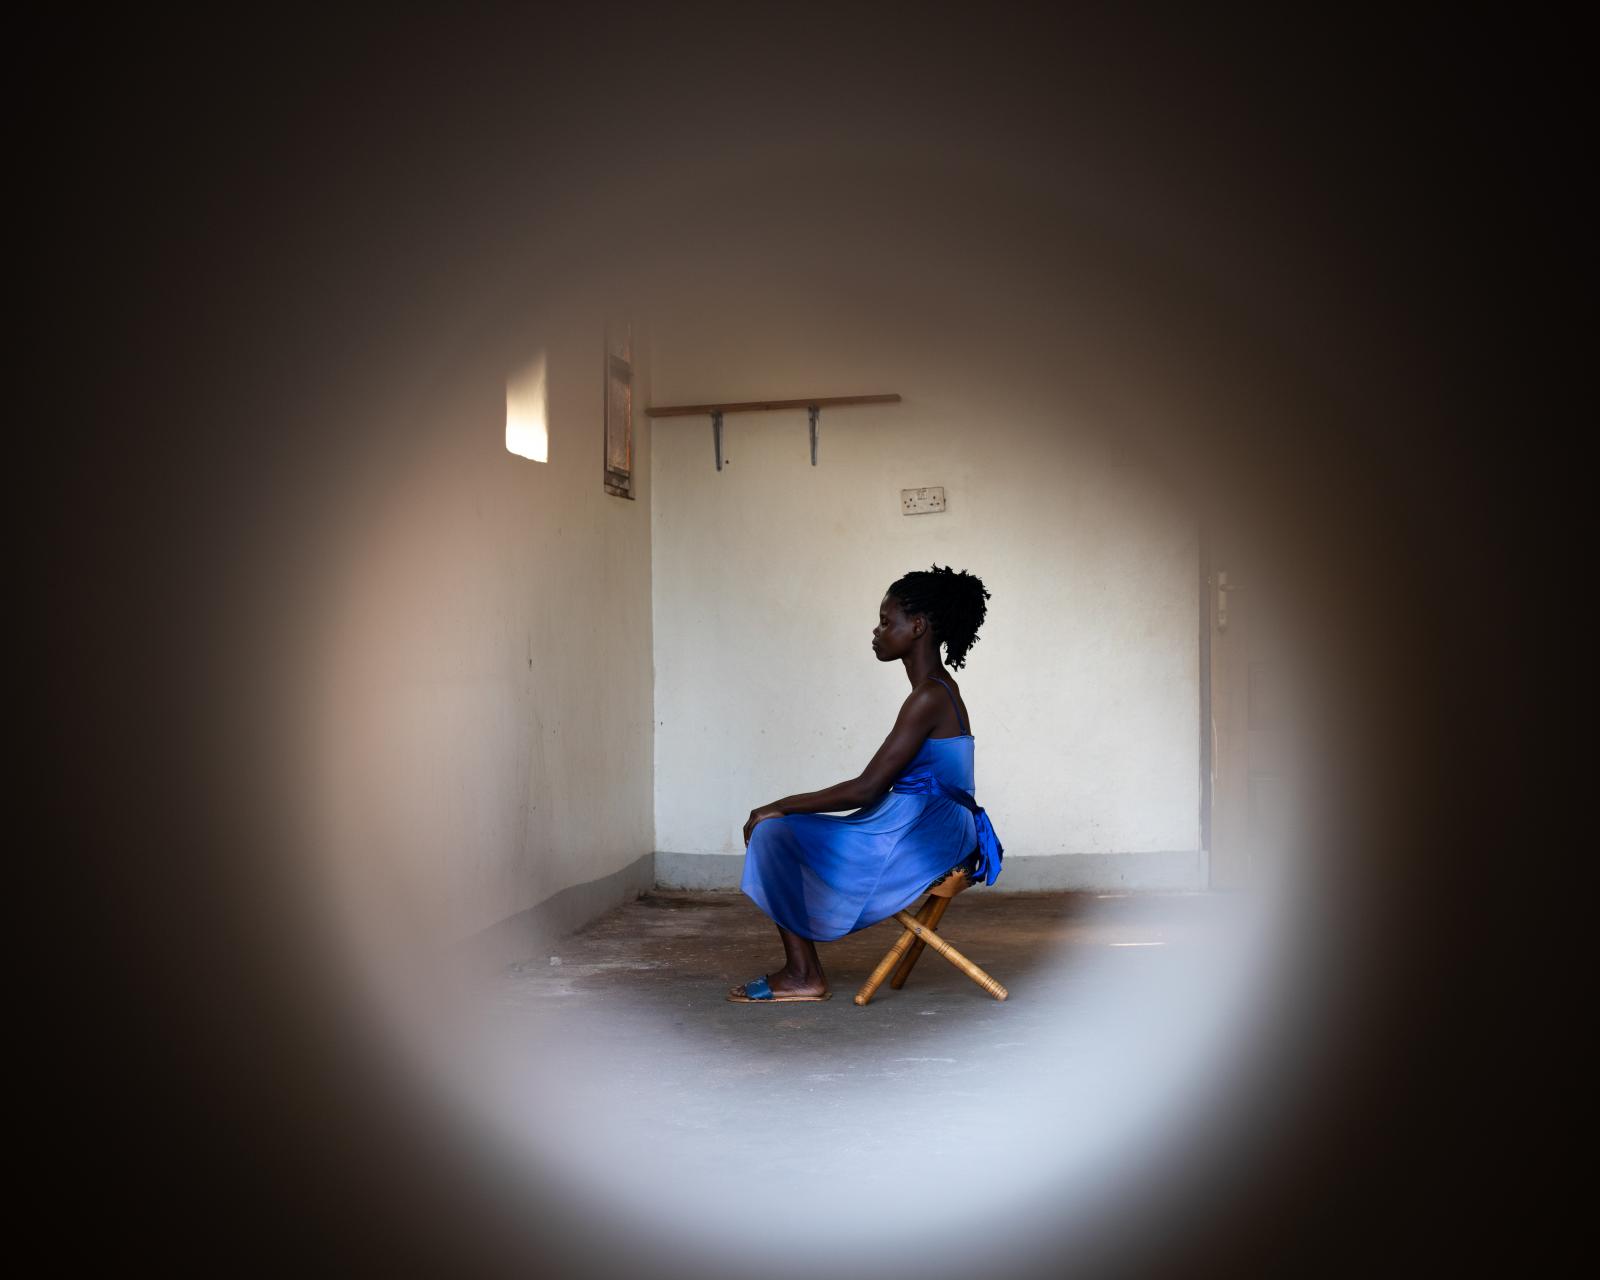 Image from Surviving Bery: A Girlhood Trauma | DeLovie Kwagala  - “Do you ever feel like you’re suffocating...